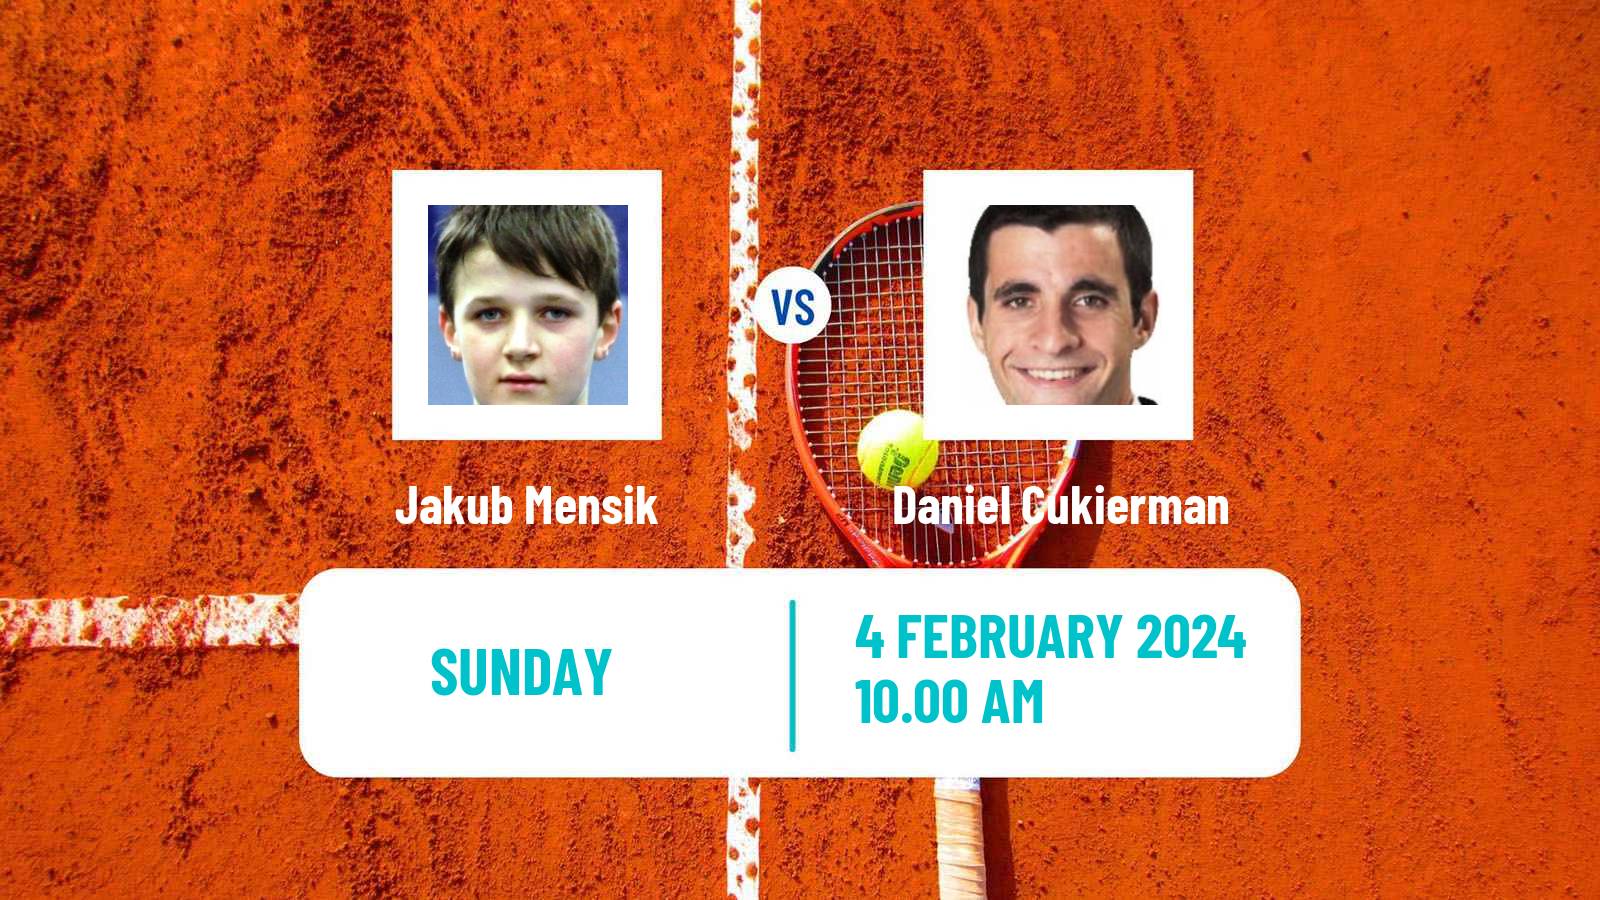 Tennis Davis Cup World Group Jakub Mensik - Daniel Cukierman